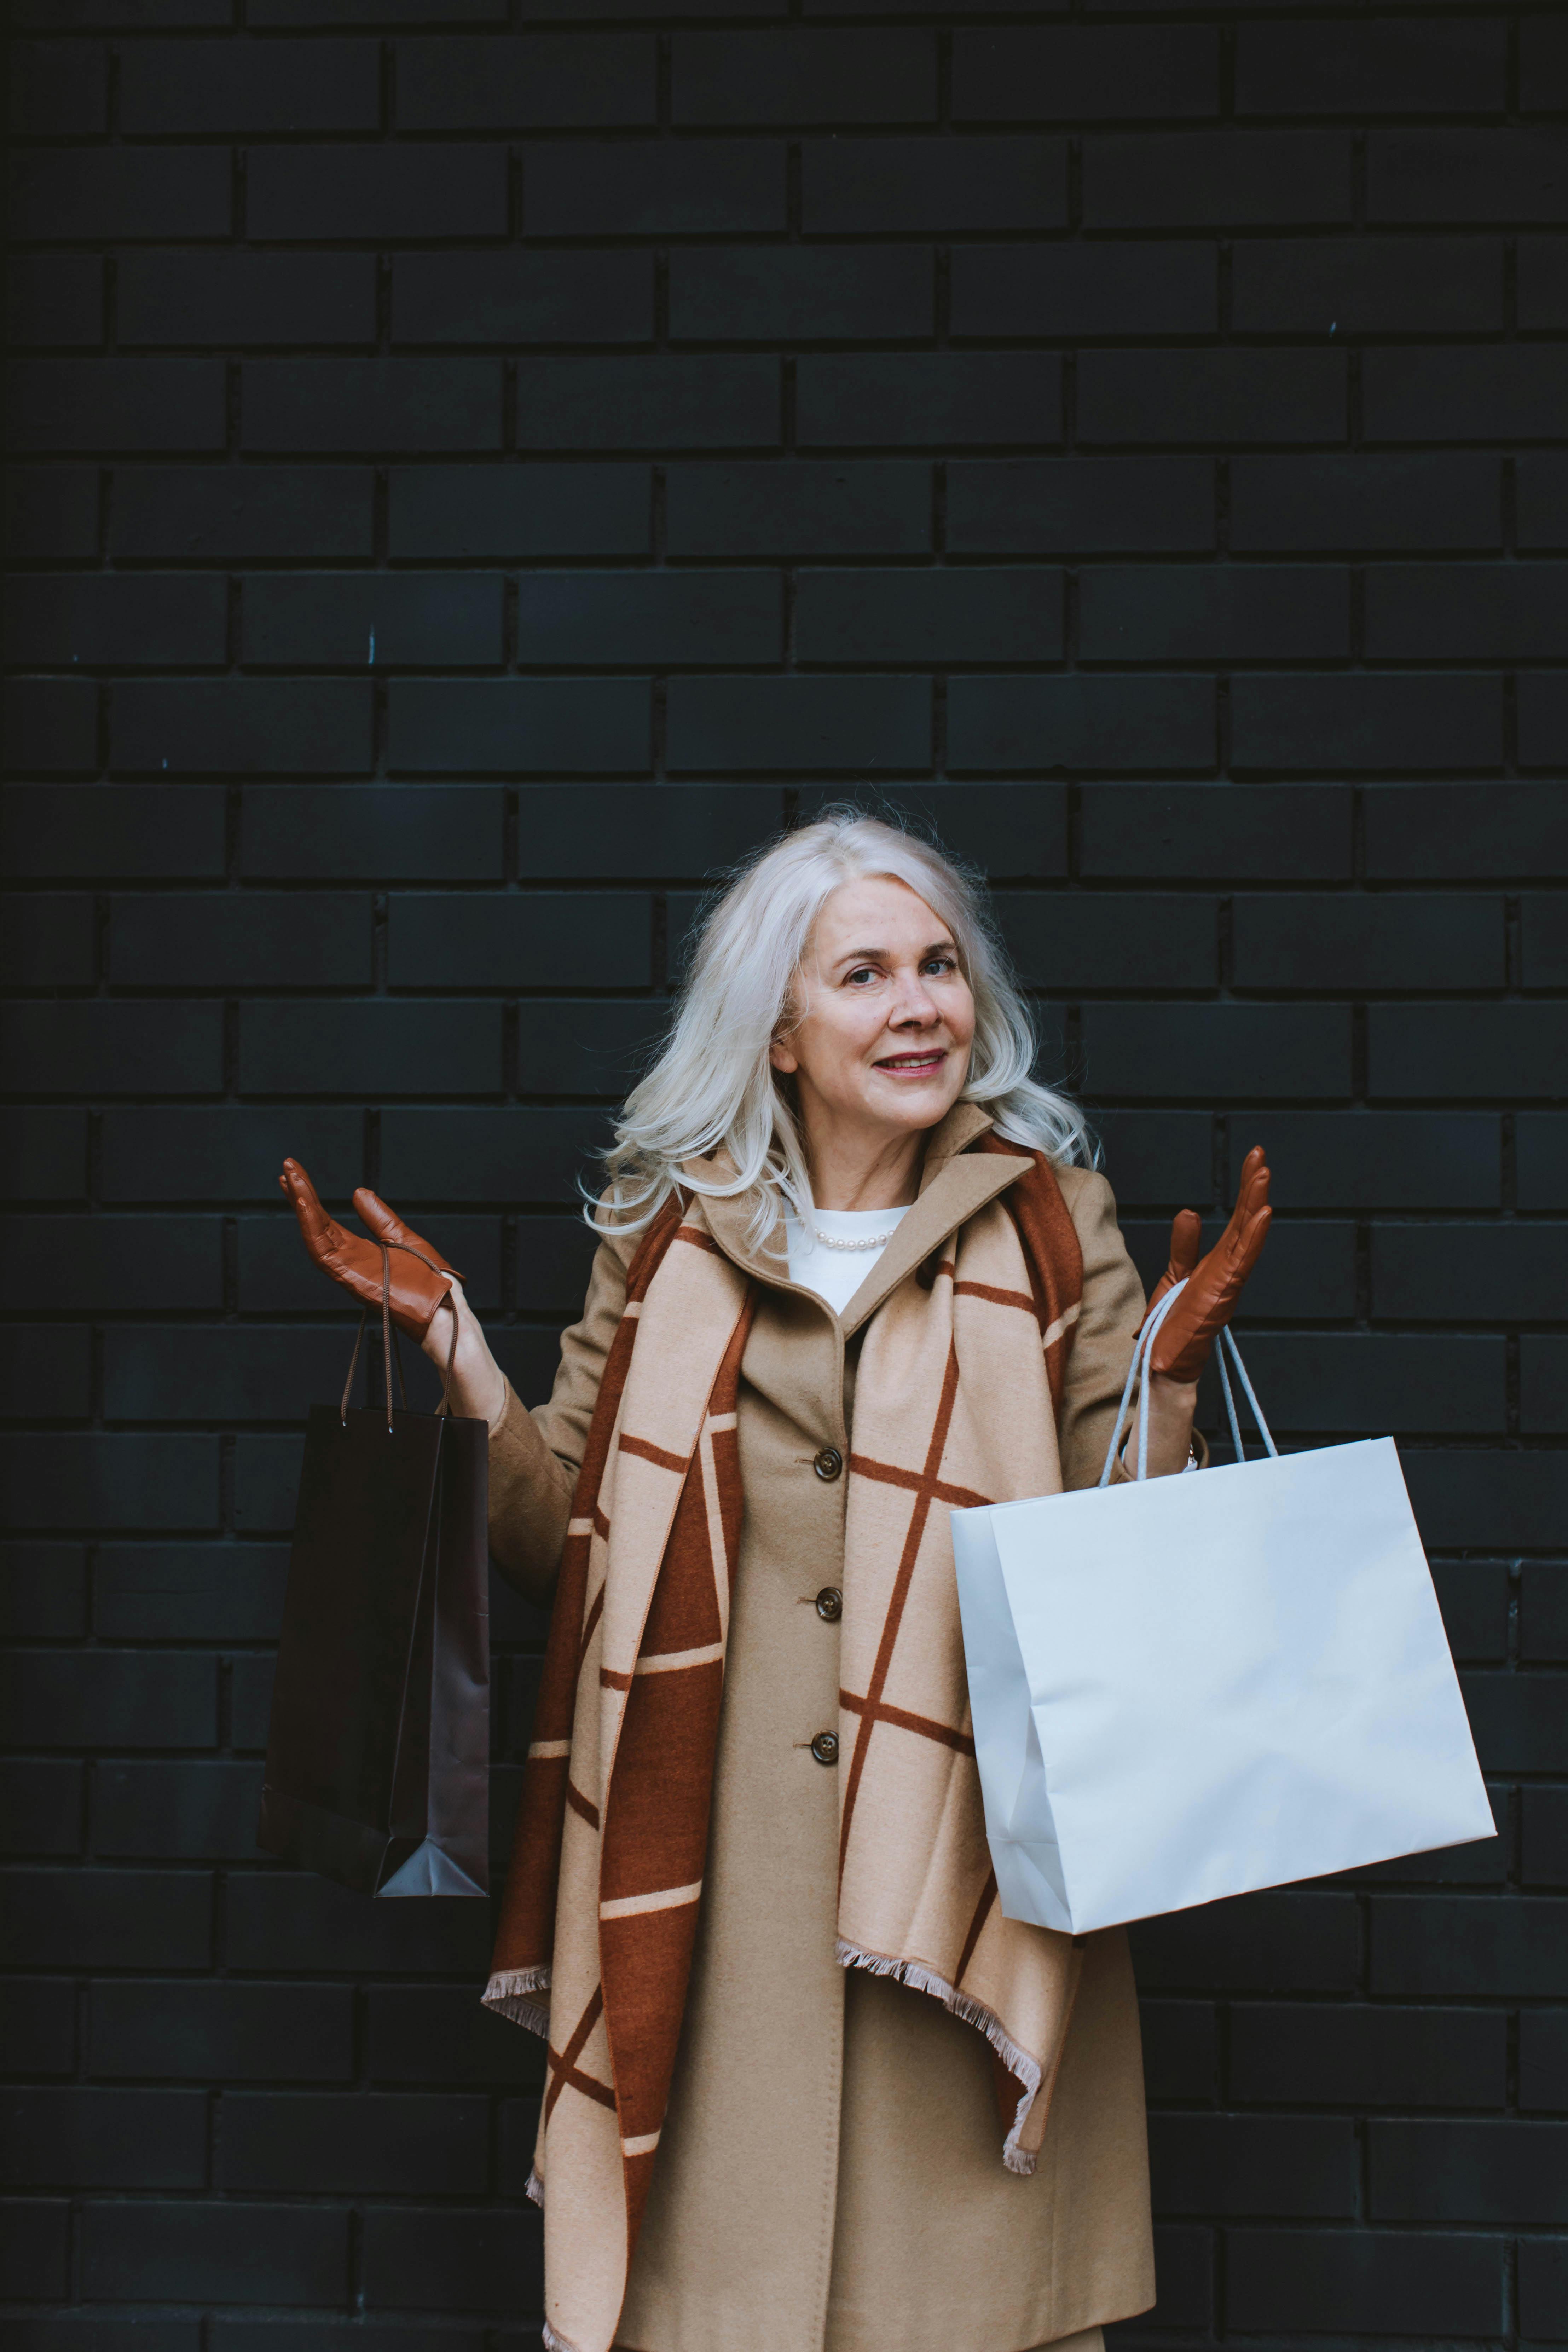 An elegant older woman holding shopping bags | Source: Pexels